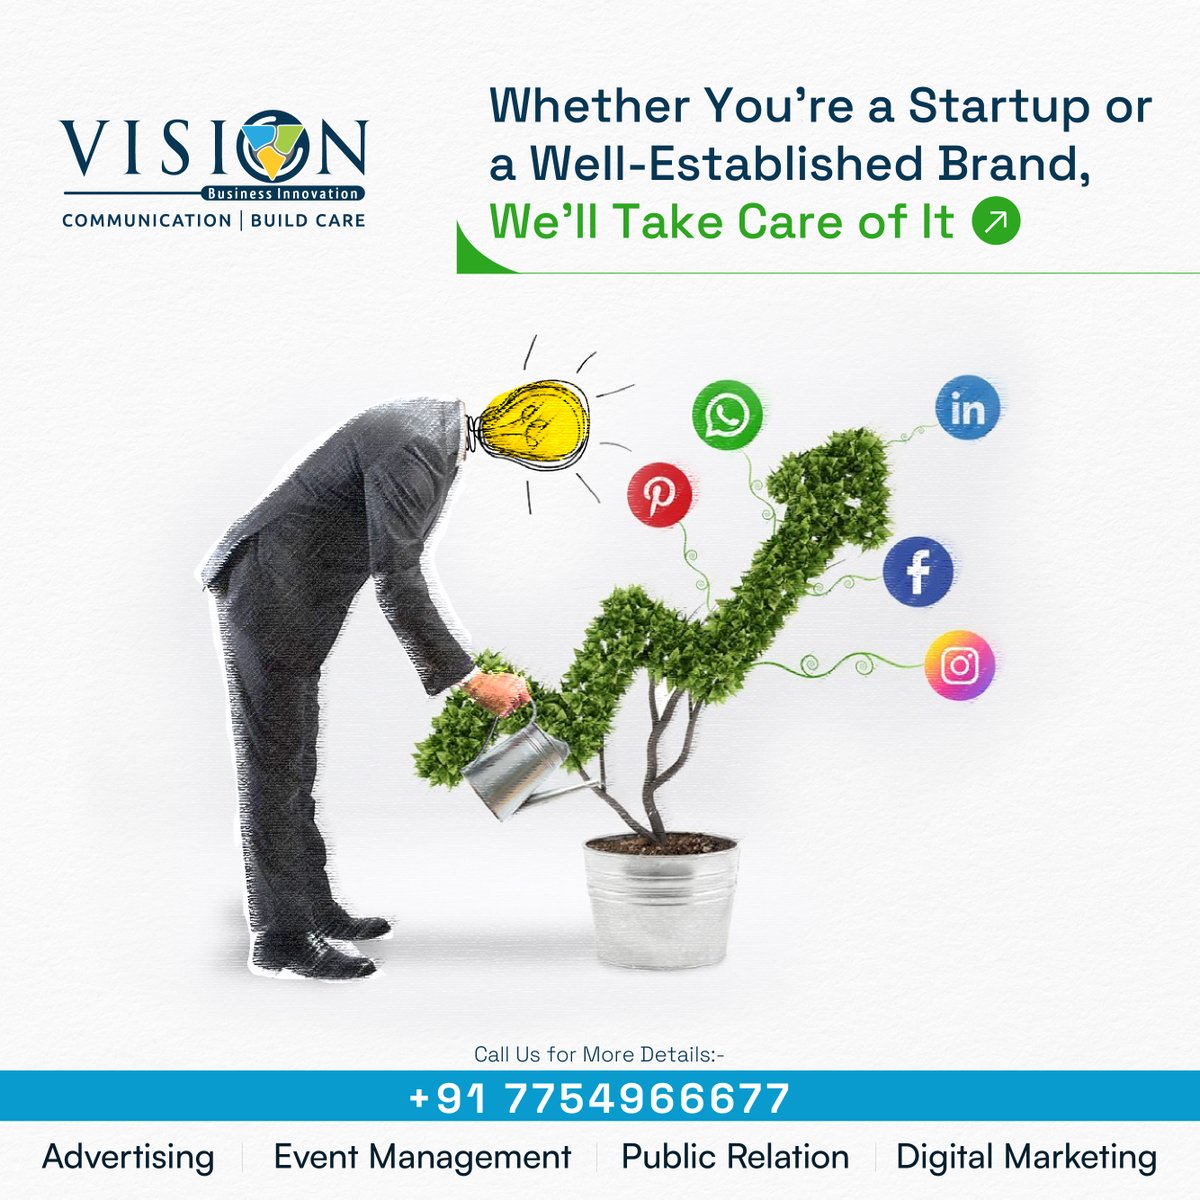 Whether you;re a Startup or a well Established Brand We'll Take Care of it.
#Advertising #socialmediamarketing #Media #Lucknow #webdesign #graphicdesign #DigitalMarketing #seo #WebPromotion #marketingtips #GomtiNagar #marketing
#VisionCommunication #VisionCorp #BusinessInnovation